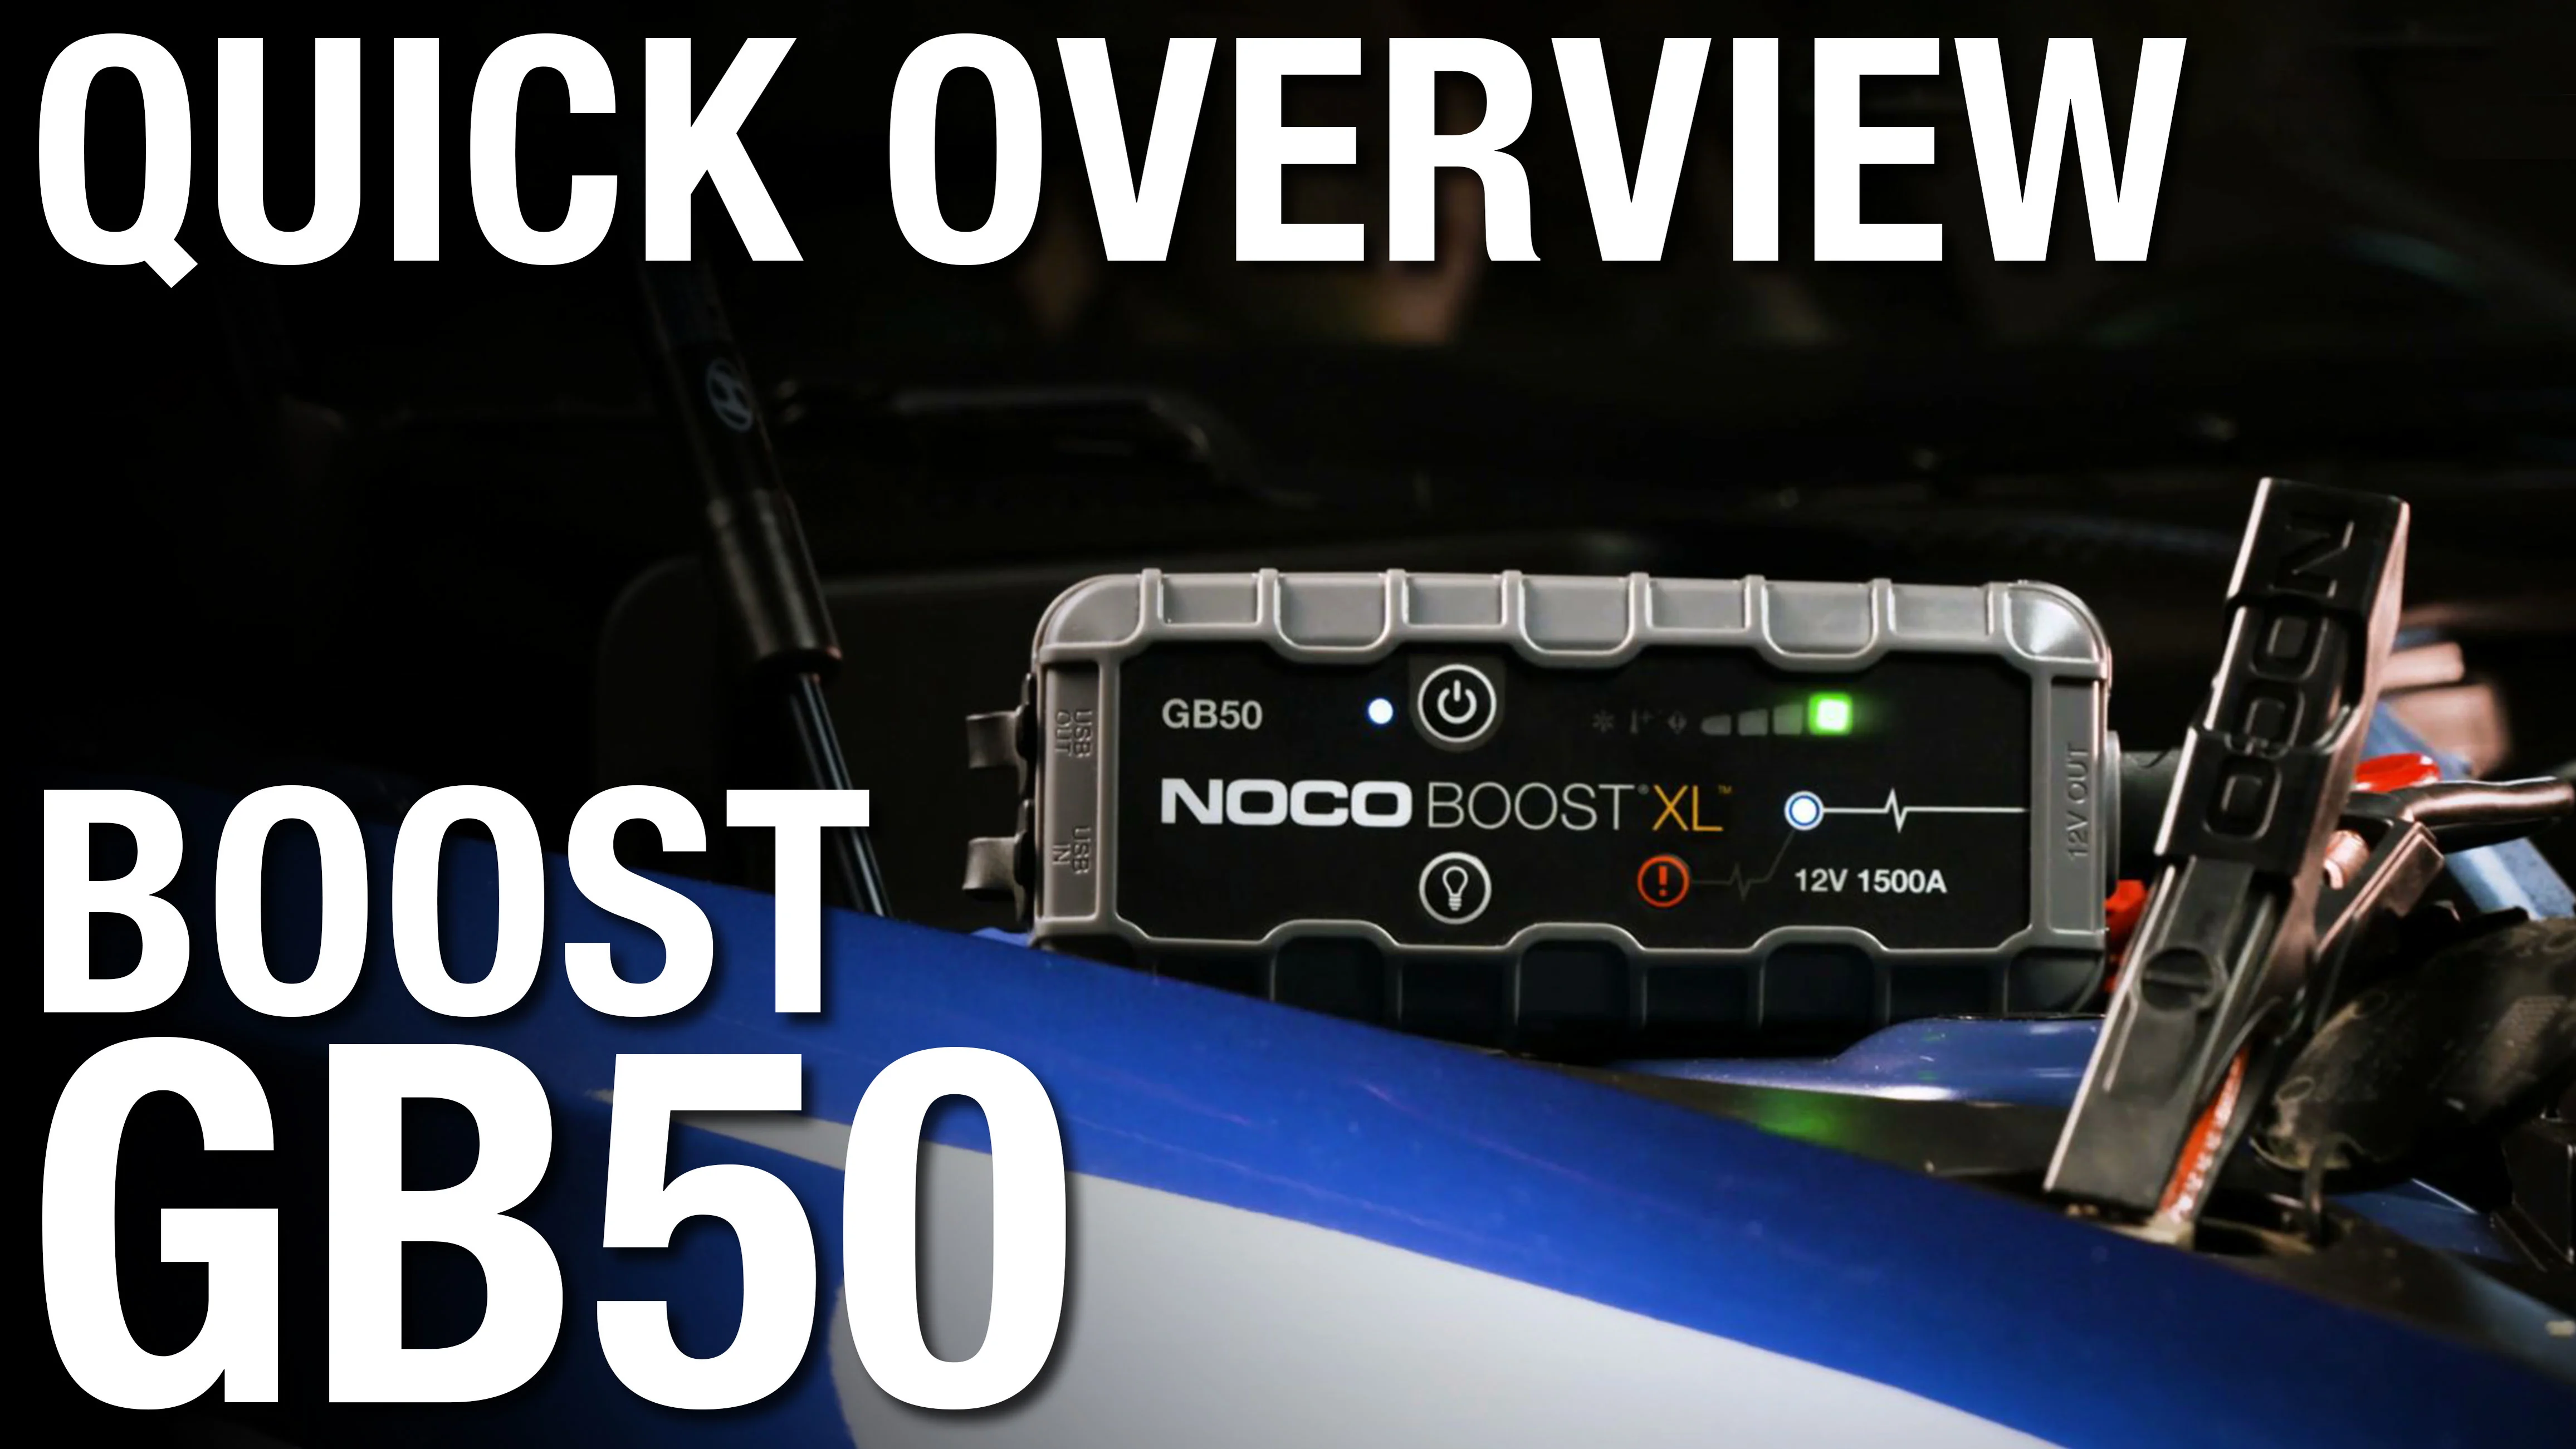 NOCO GB50 Boost Plus 1500A UltraSafe Lithium Jump Starter